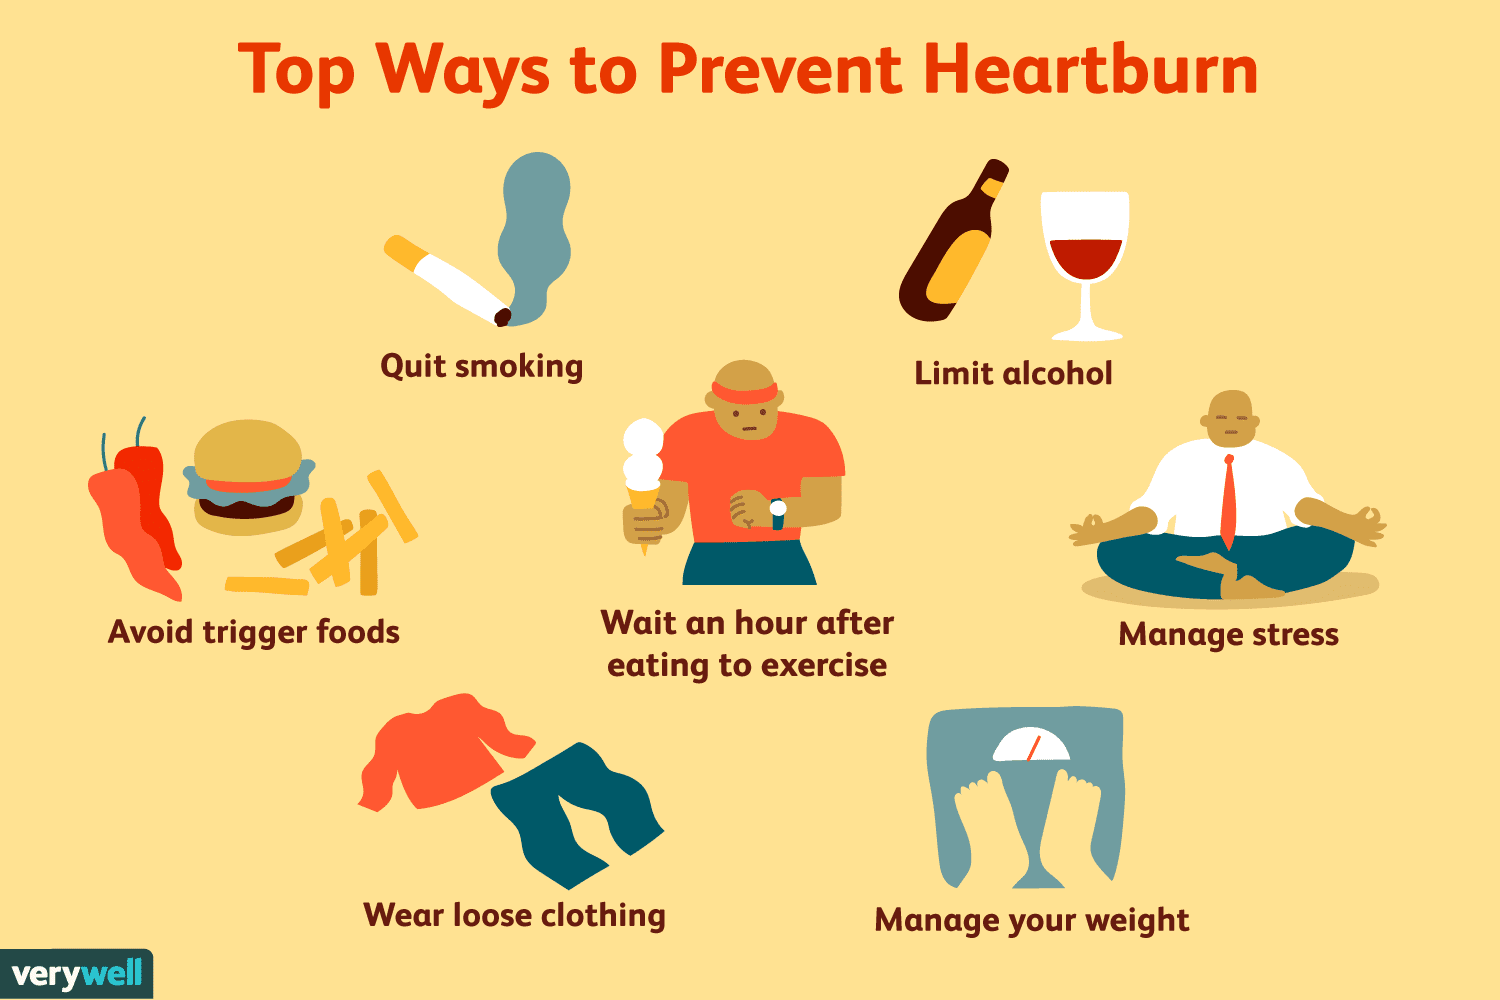 How to Prevent Heartburn